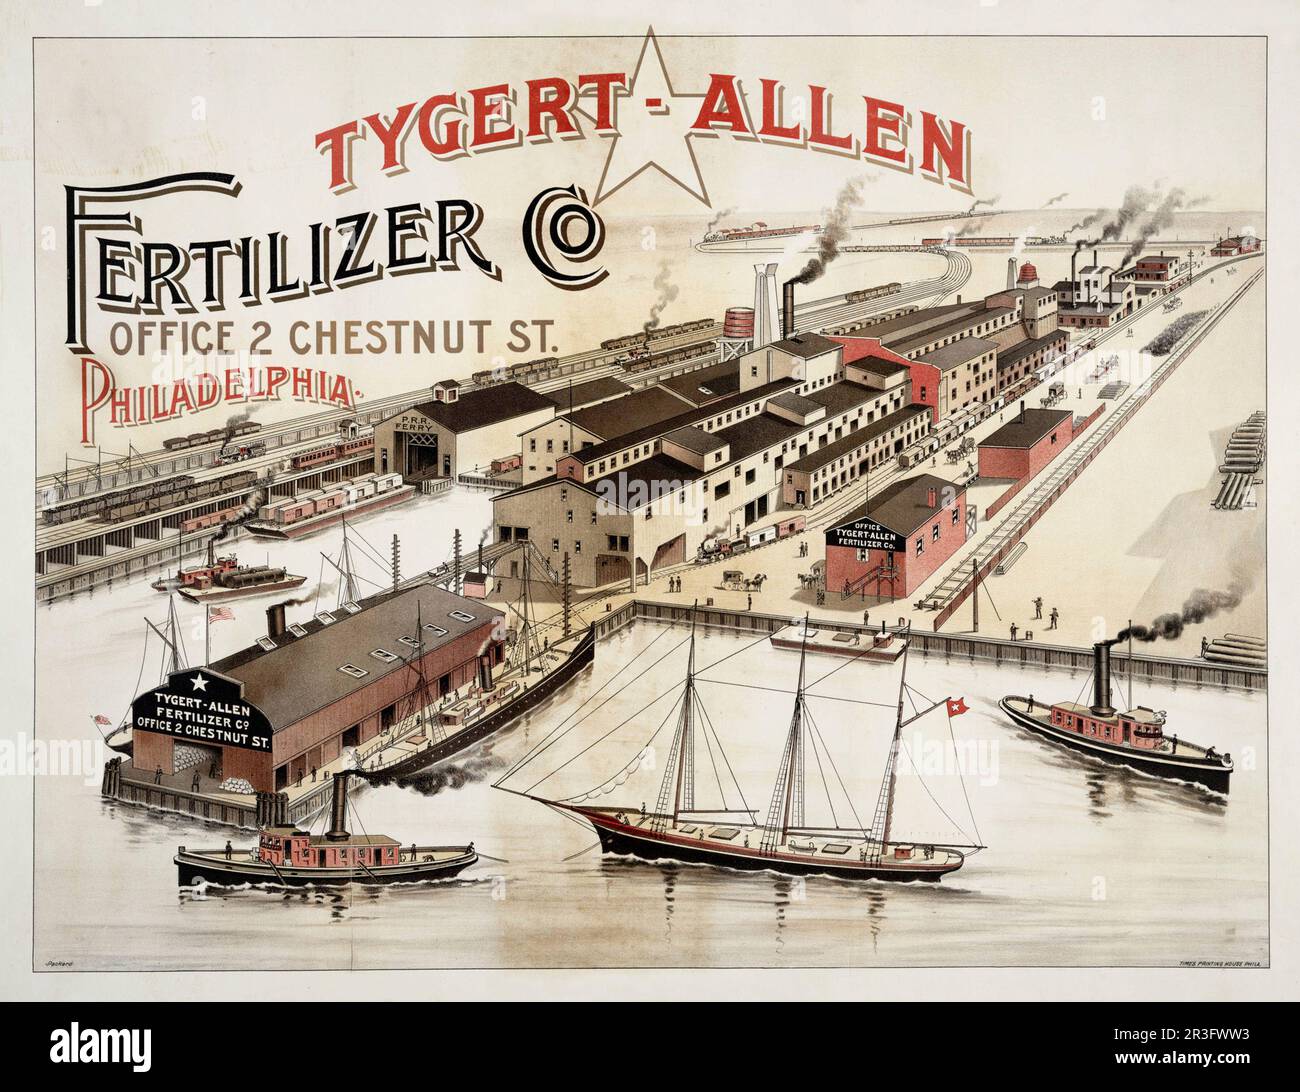 Vintage Print der Tygert-Allen Fertilizer Company aus Philadelphia, Philadelphia. Stockfoto